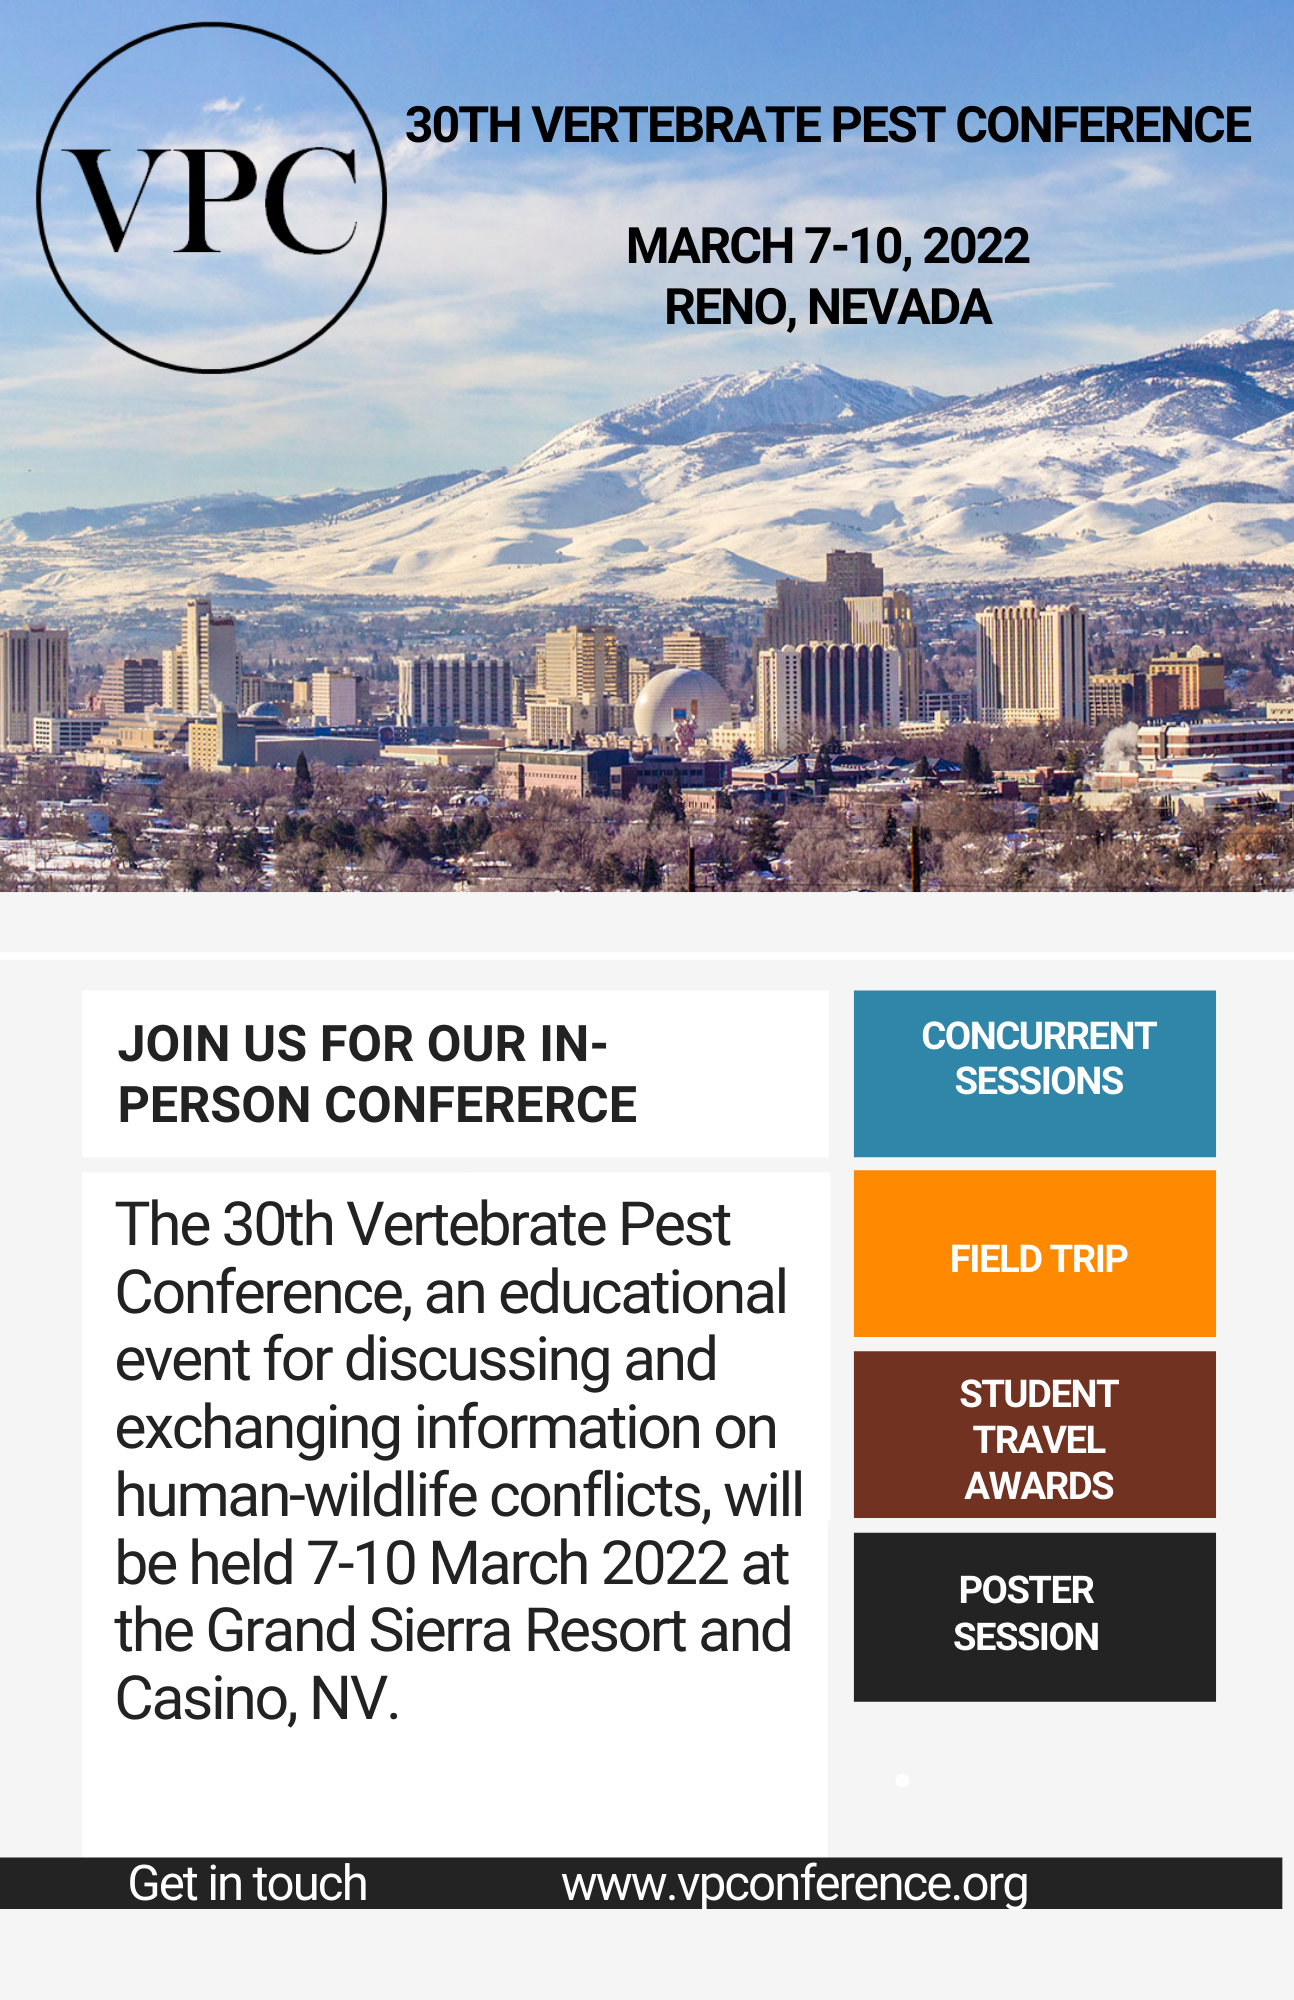 Vertebrate Pest Council - Save the Date. March 7-10, 2022. Reno, Nevada.